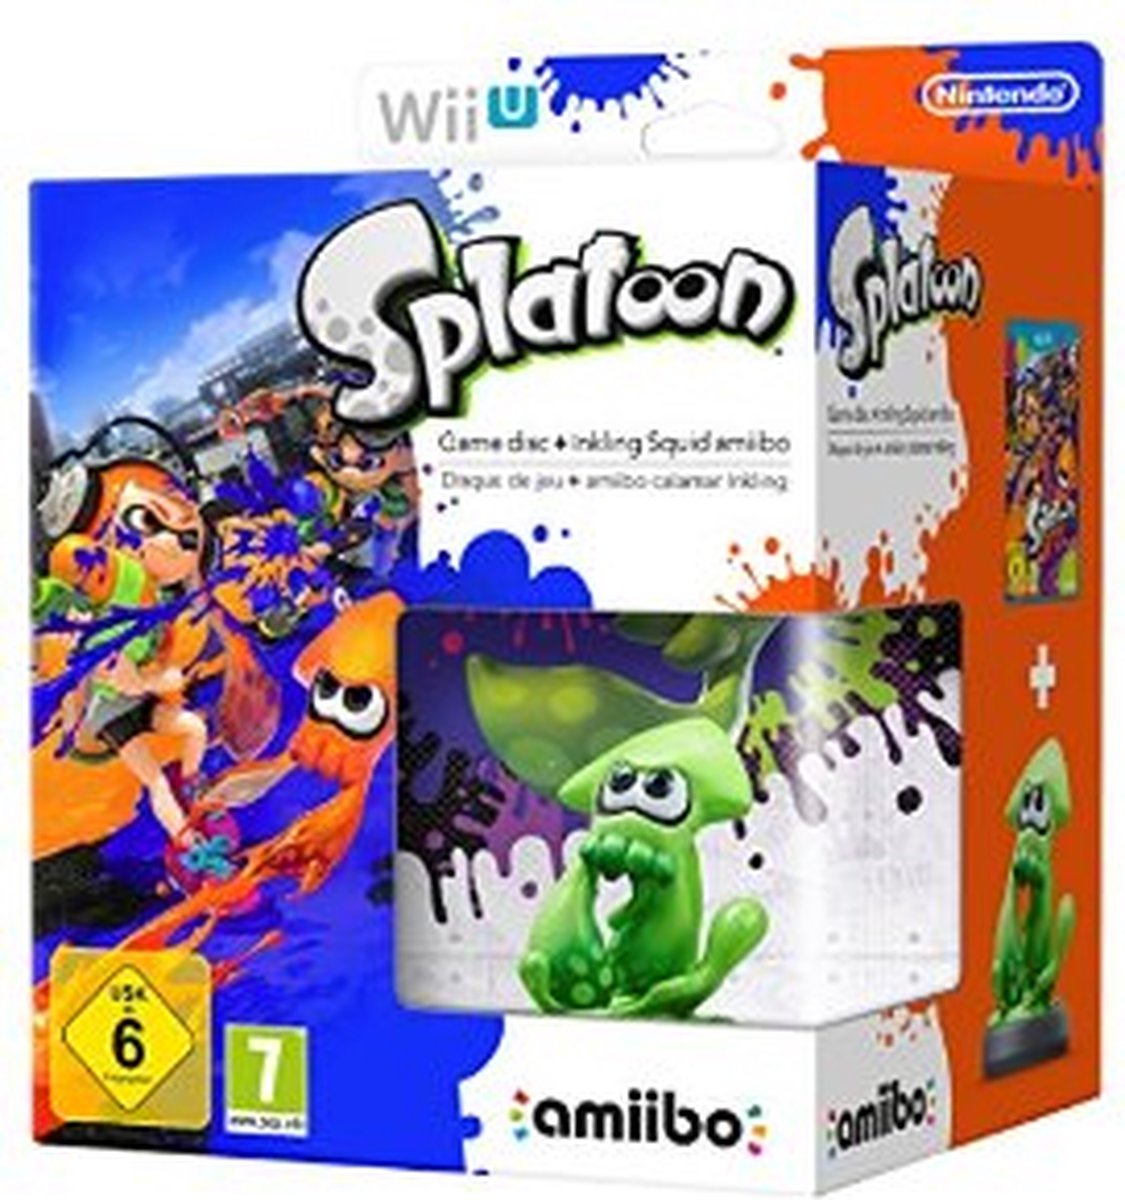 Splatoon + Inkling Squid amiibo bundel - Wii U | Games | bol.com